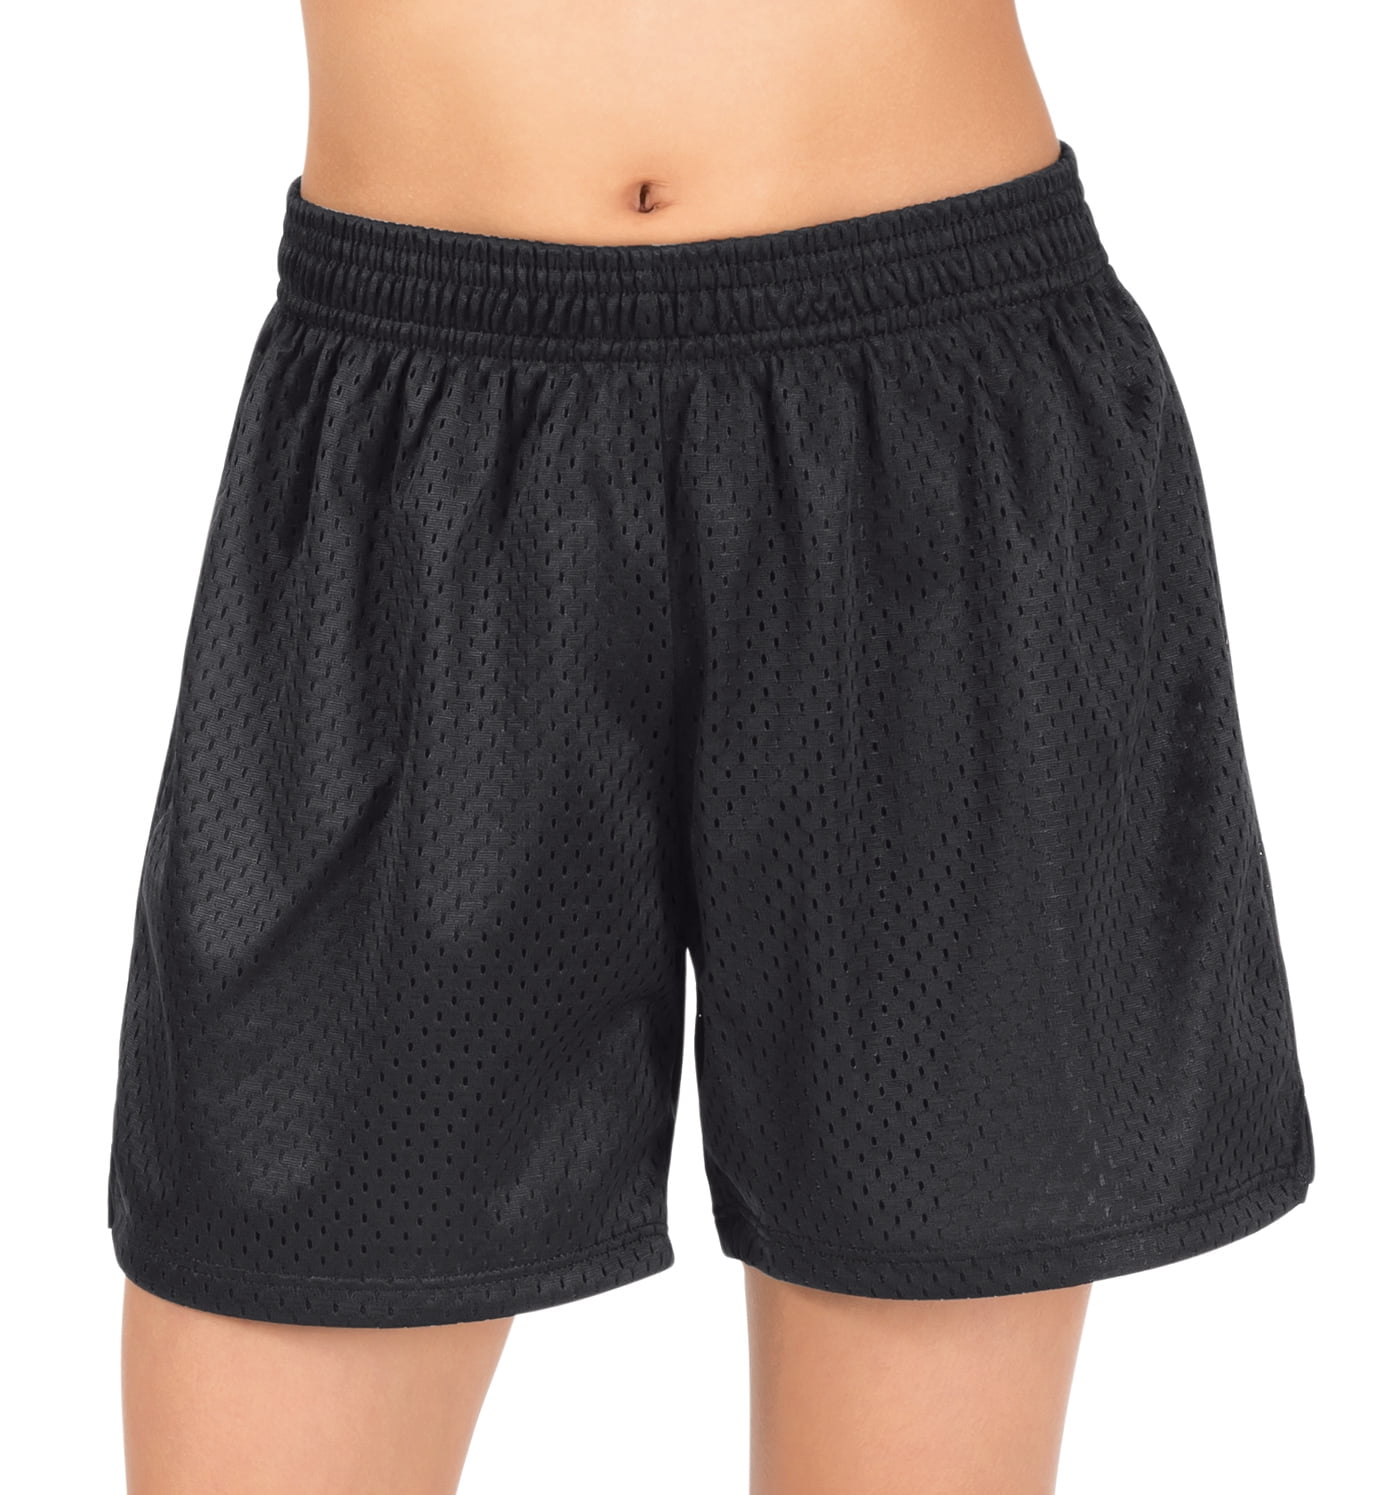 MA ONLINE Ladies Sports Wear Mesh Cycling Shorts Womens Fishnet Mesh Cycling Shorts Pants